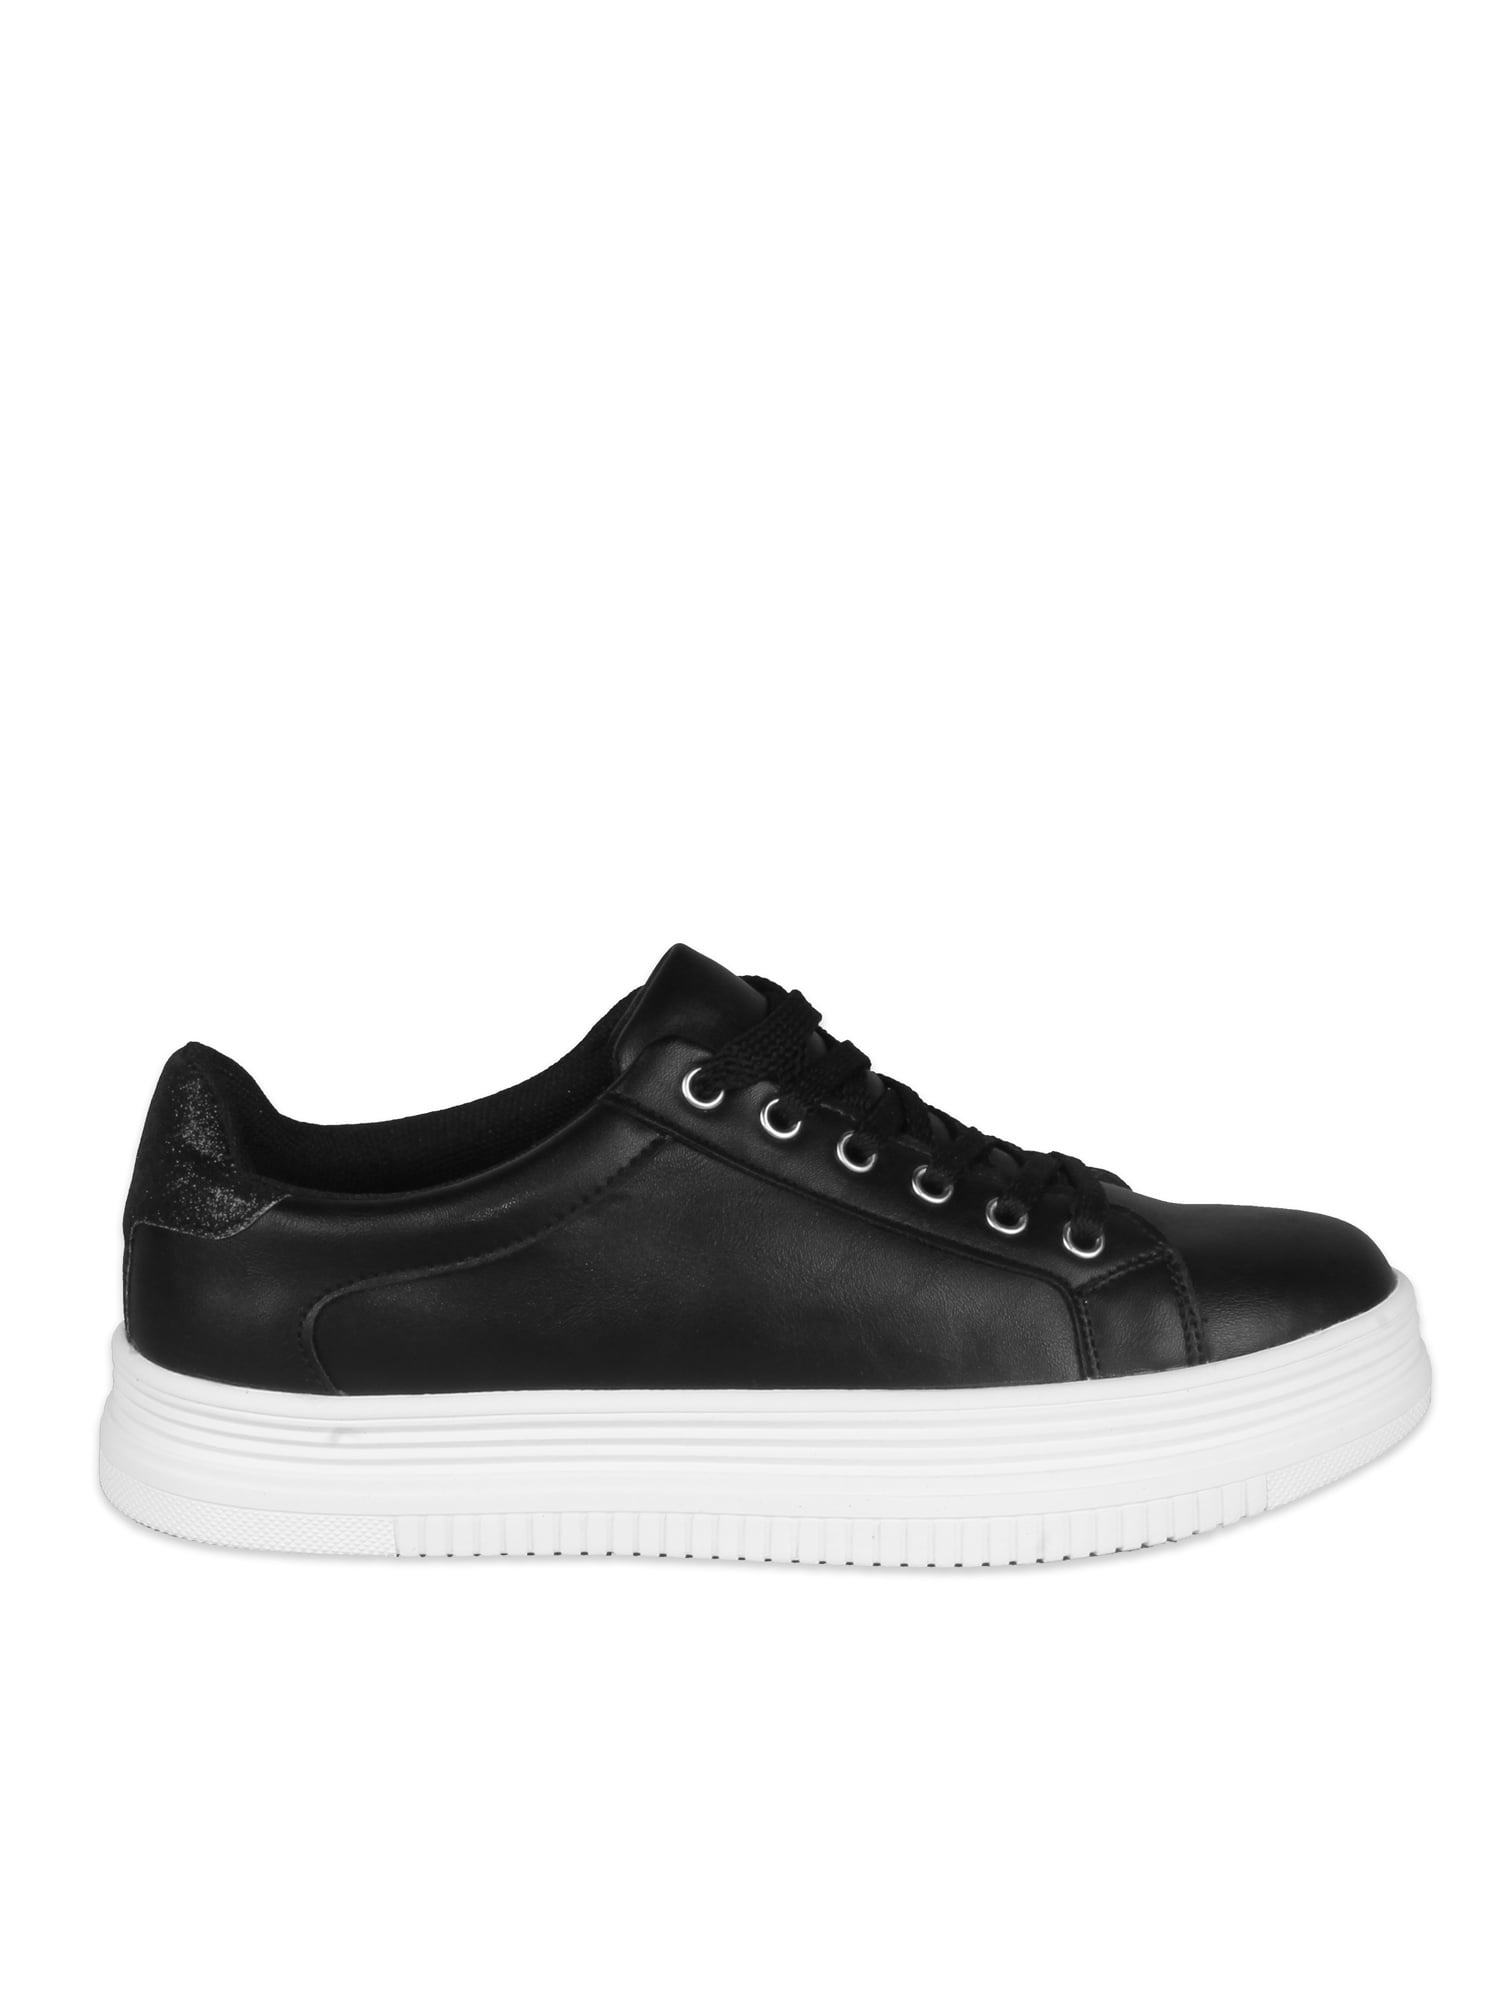 Prada Black Brogue Leather Platform Lace Up Wedge Platform Sneakers Size 39  Prada | TLC